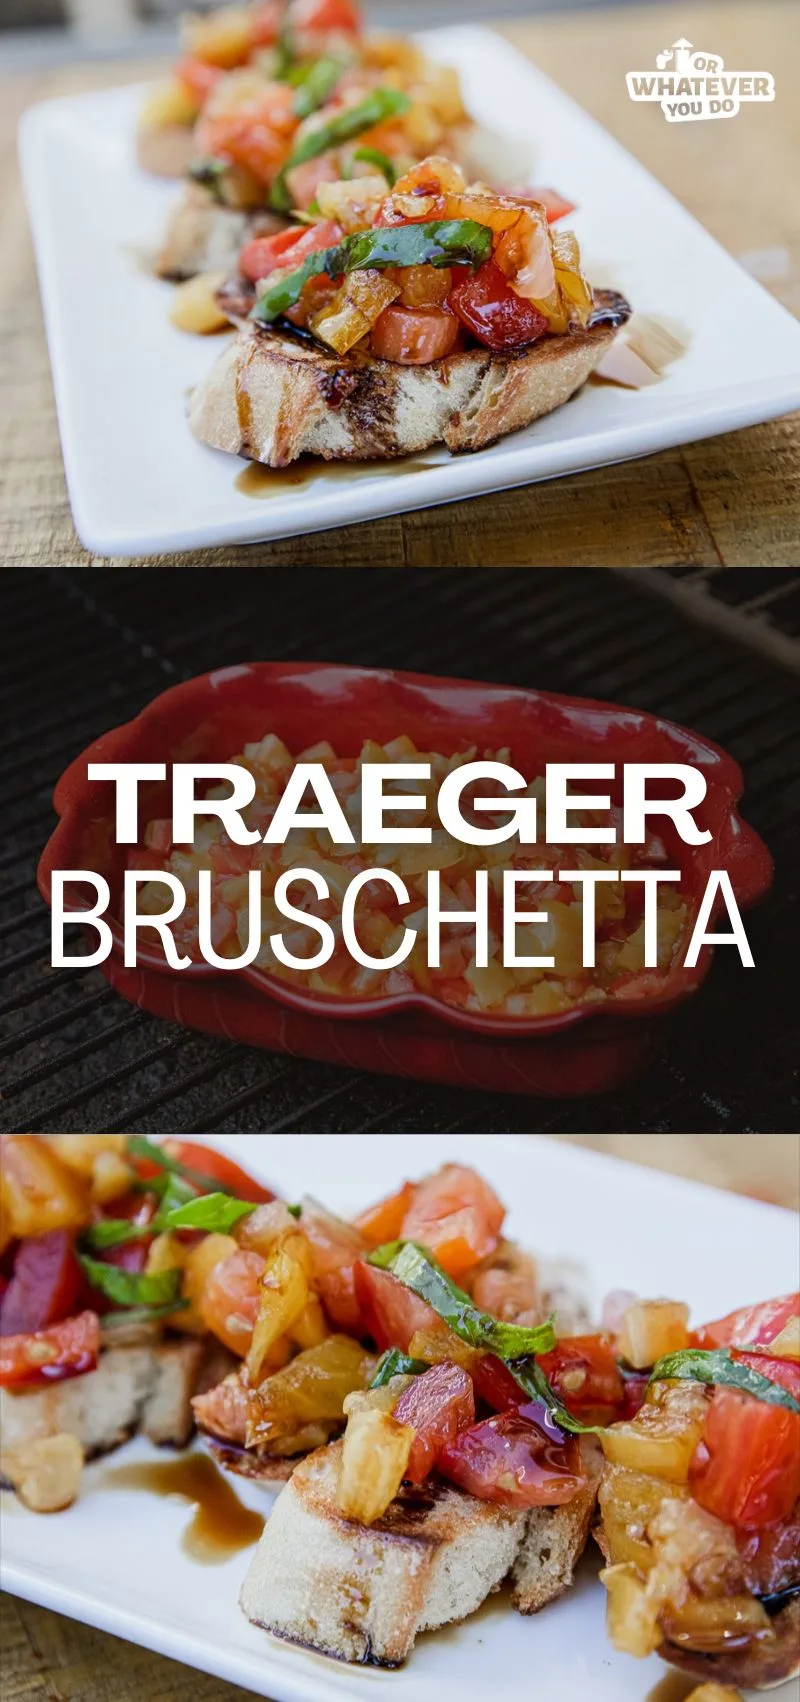 Traeger Bruschetta